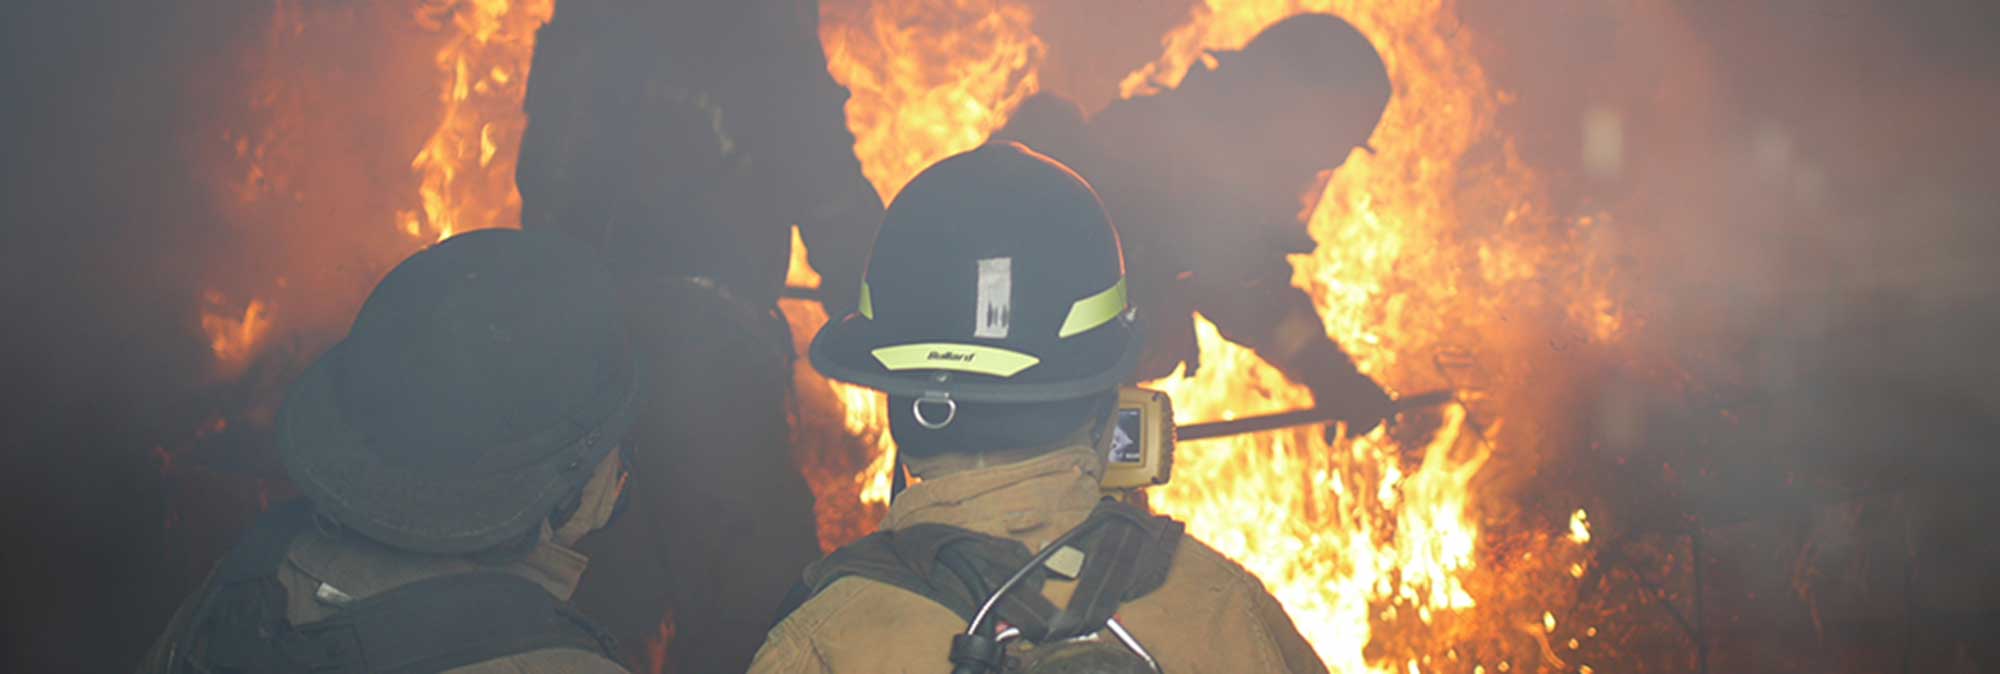 Firefighters fighting a blaze